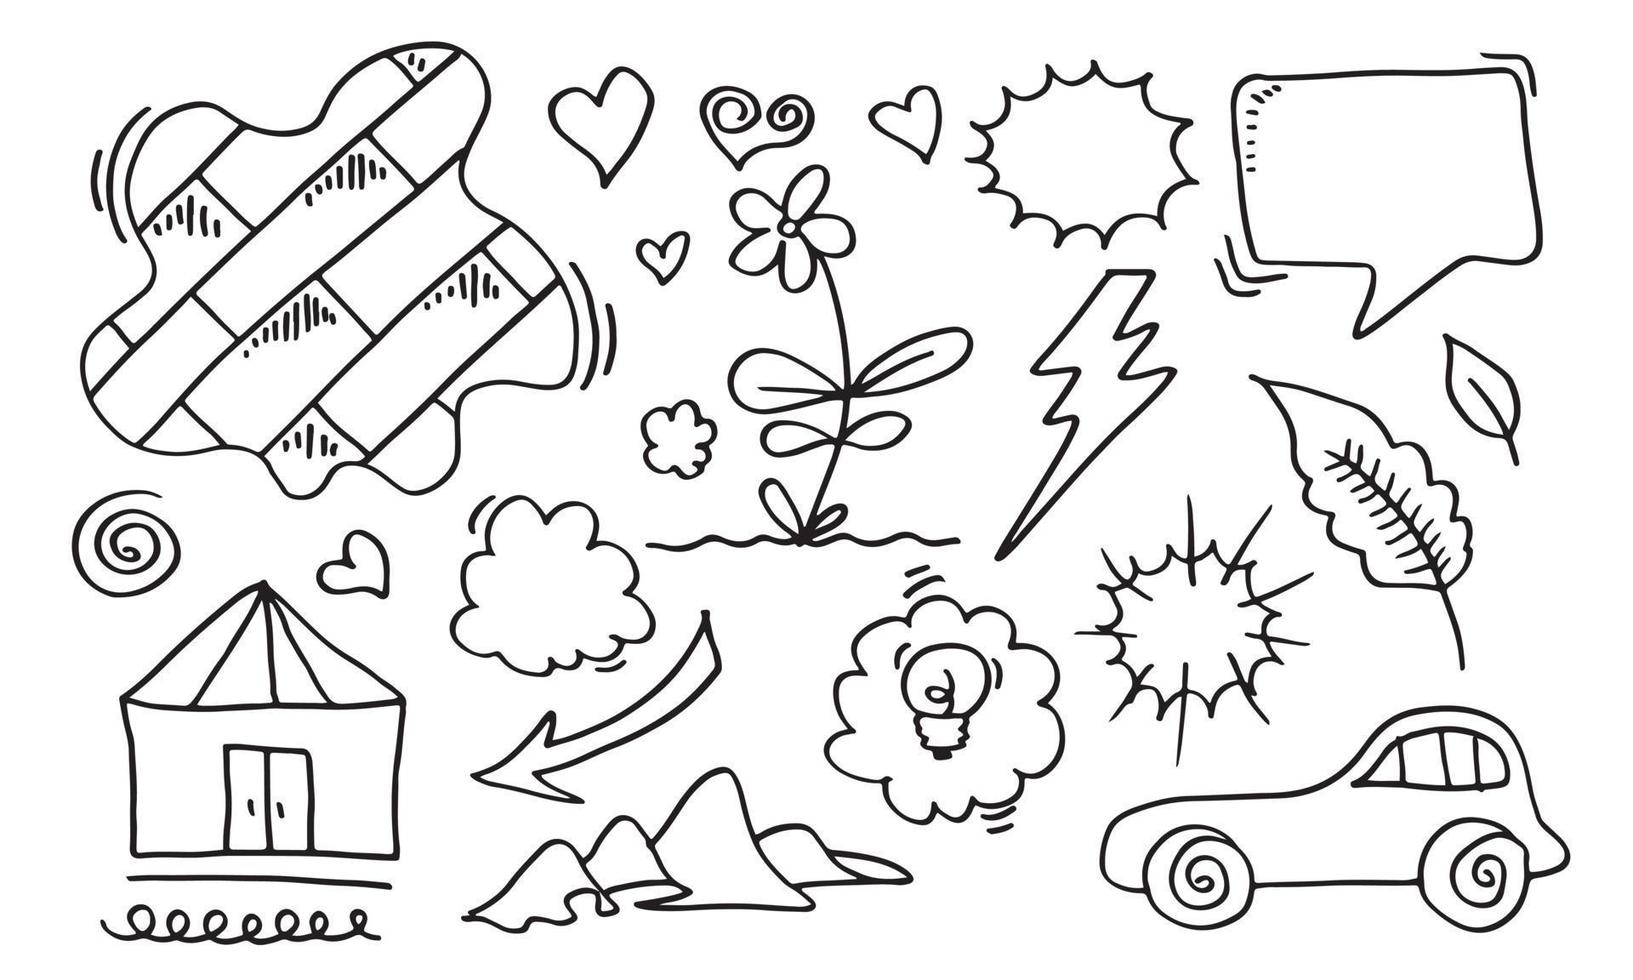 Hand drawn doodle design elements, black on white background. wall, car, emphasis, Arrow, hill. doodle sketch design elements vector